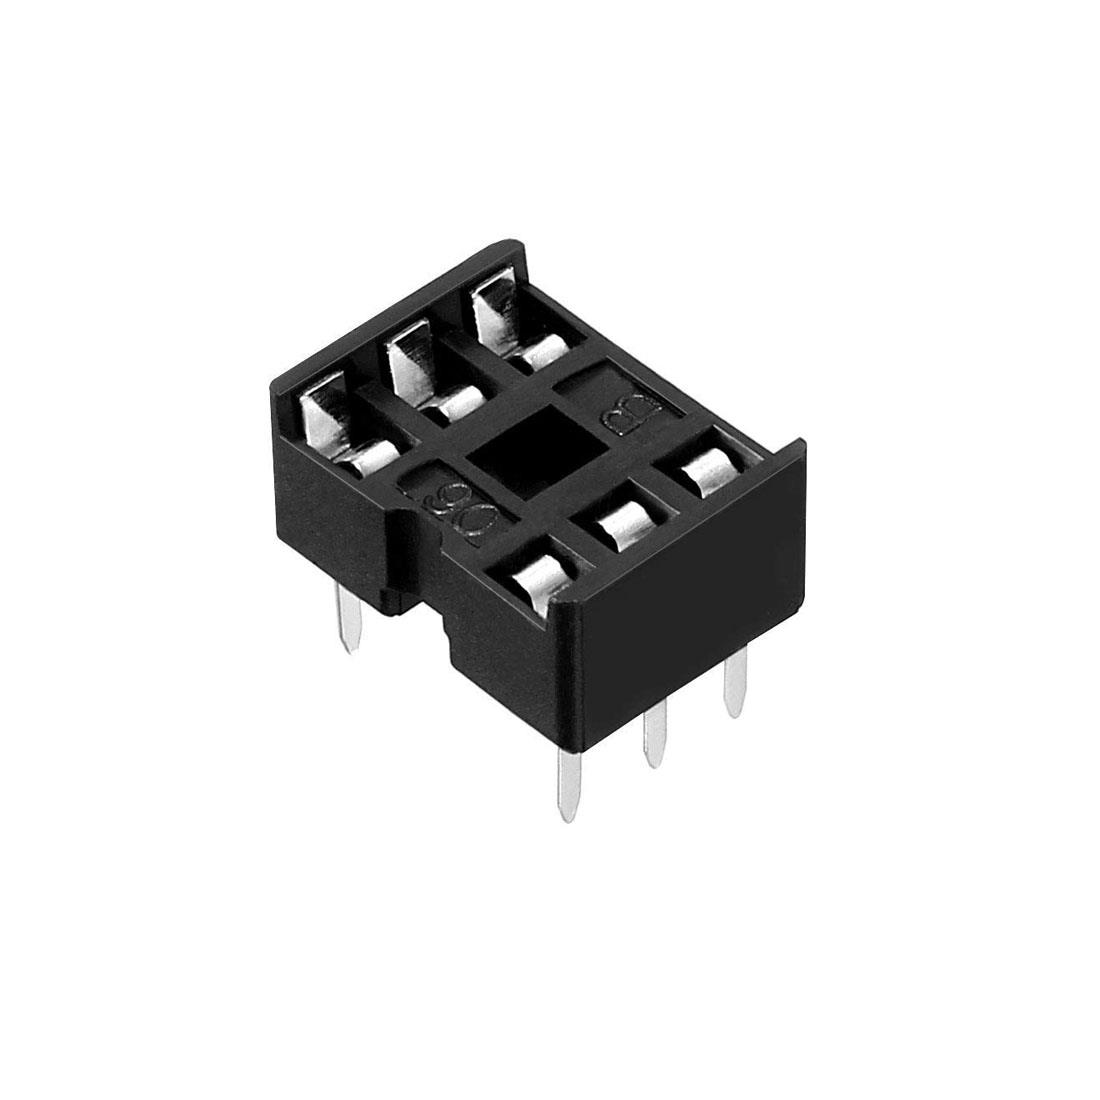 6 Pin DIP IC Sockets Adaptor Solder Type Socket [10pcs Pack]